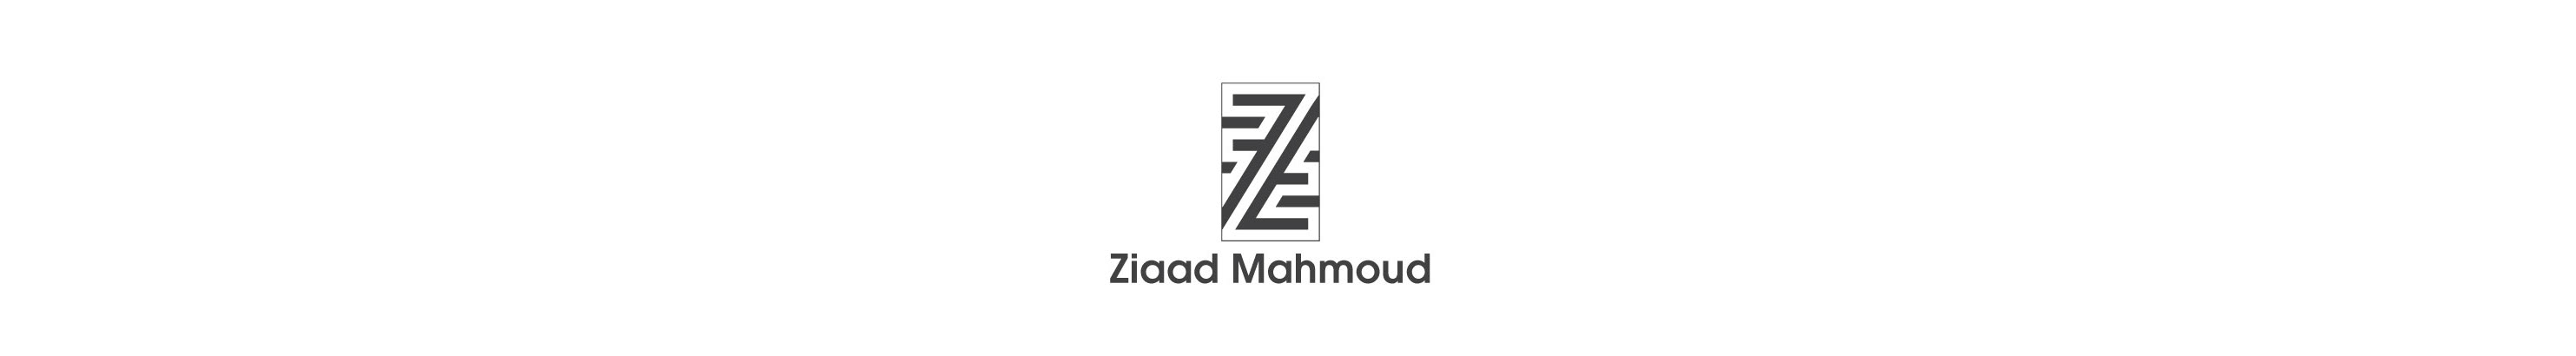 Banner profilu uživatele Ziaad Mahmoud